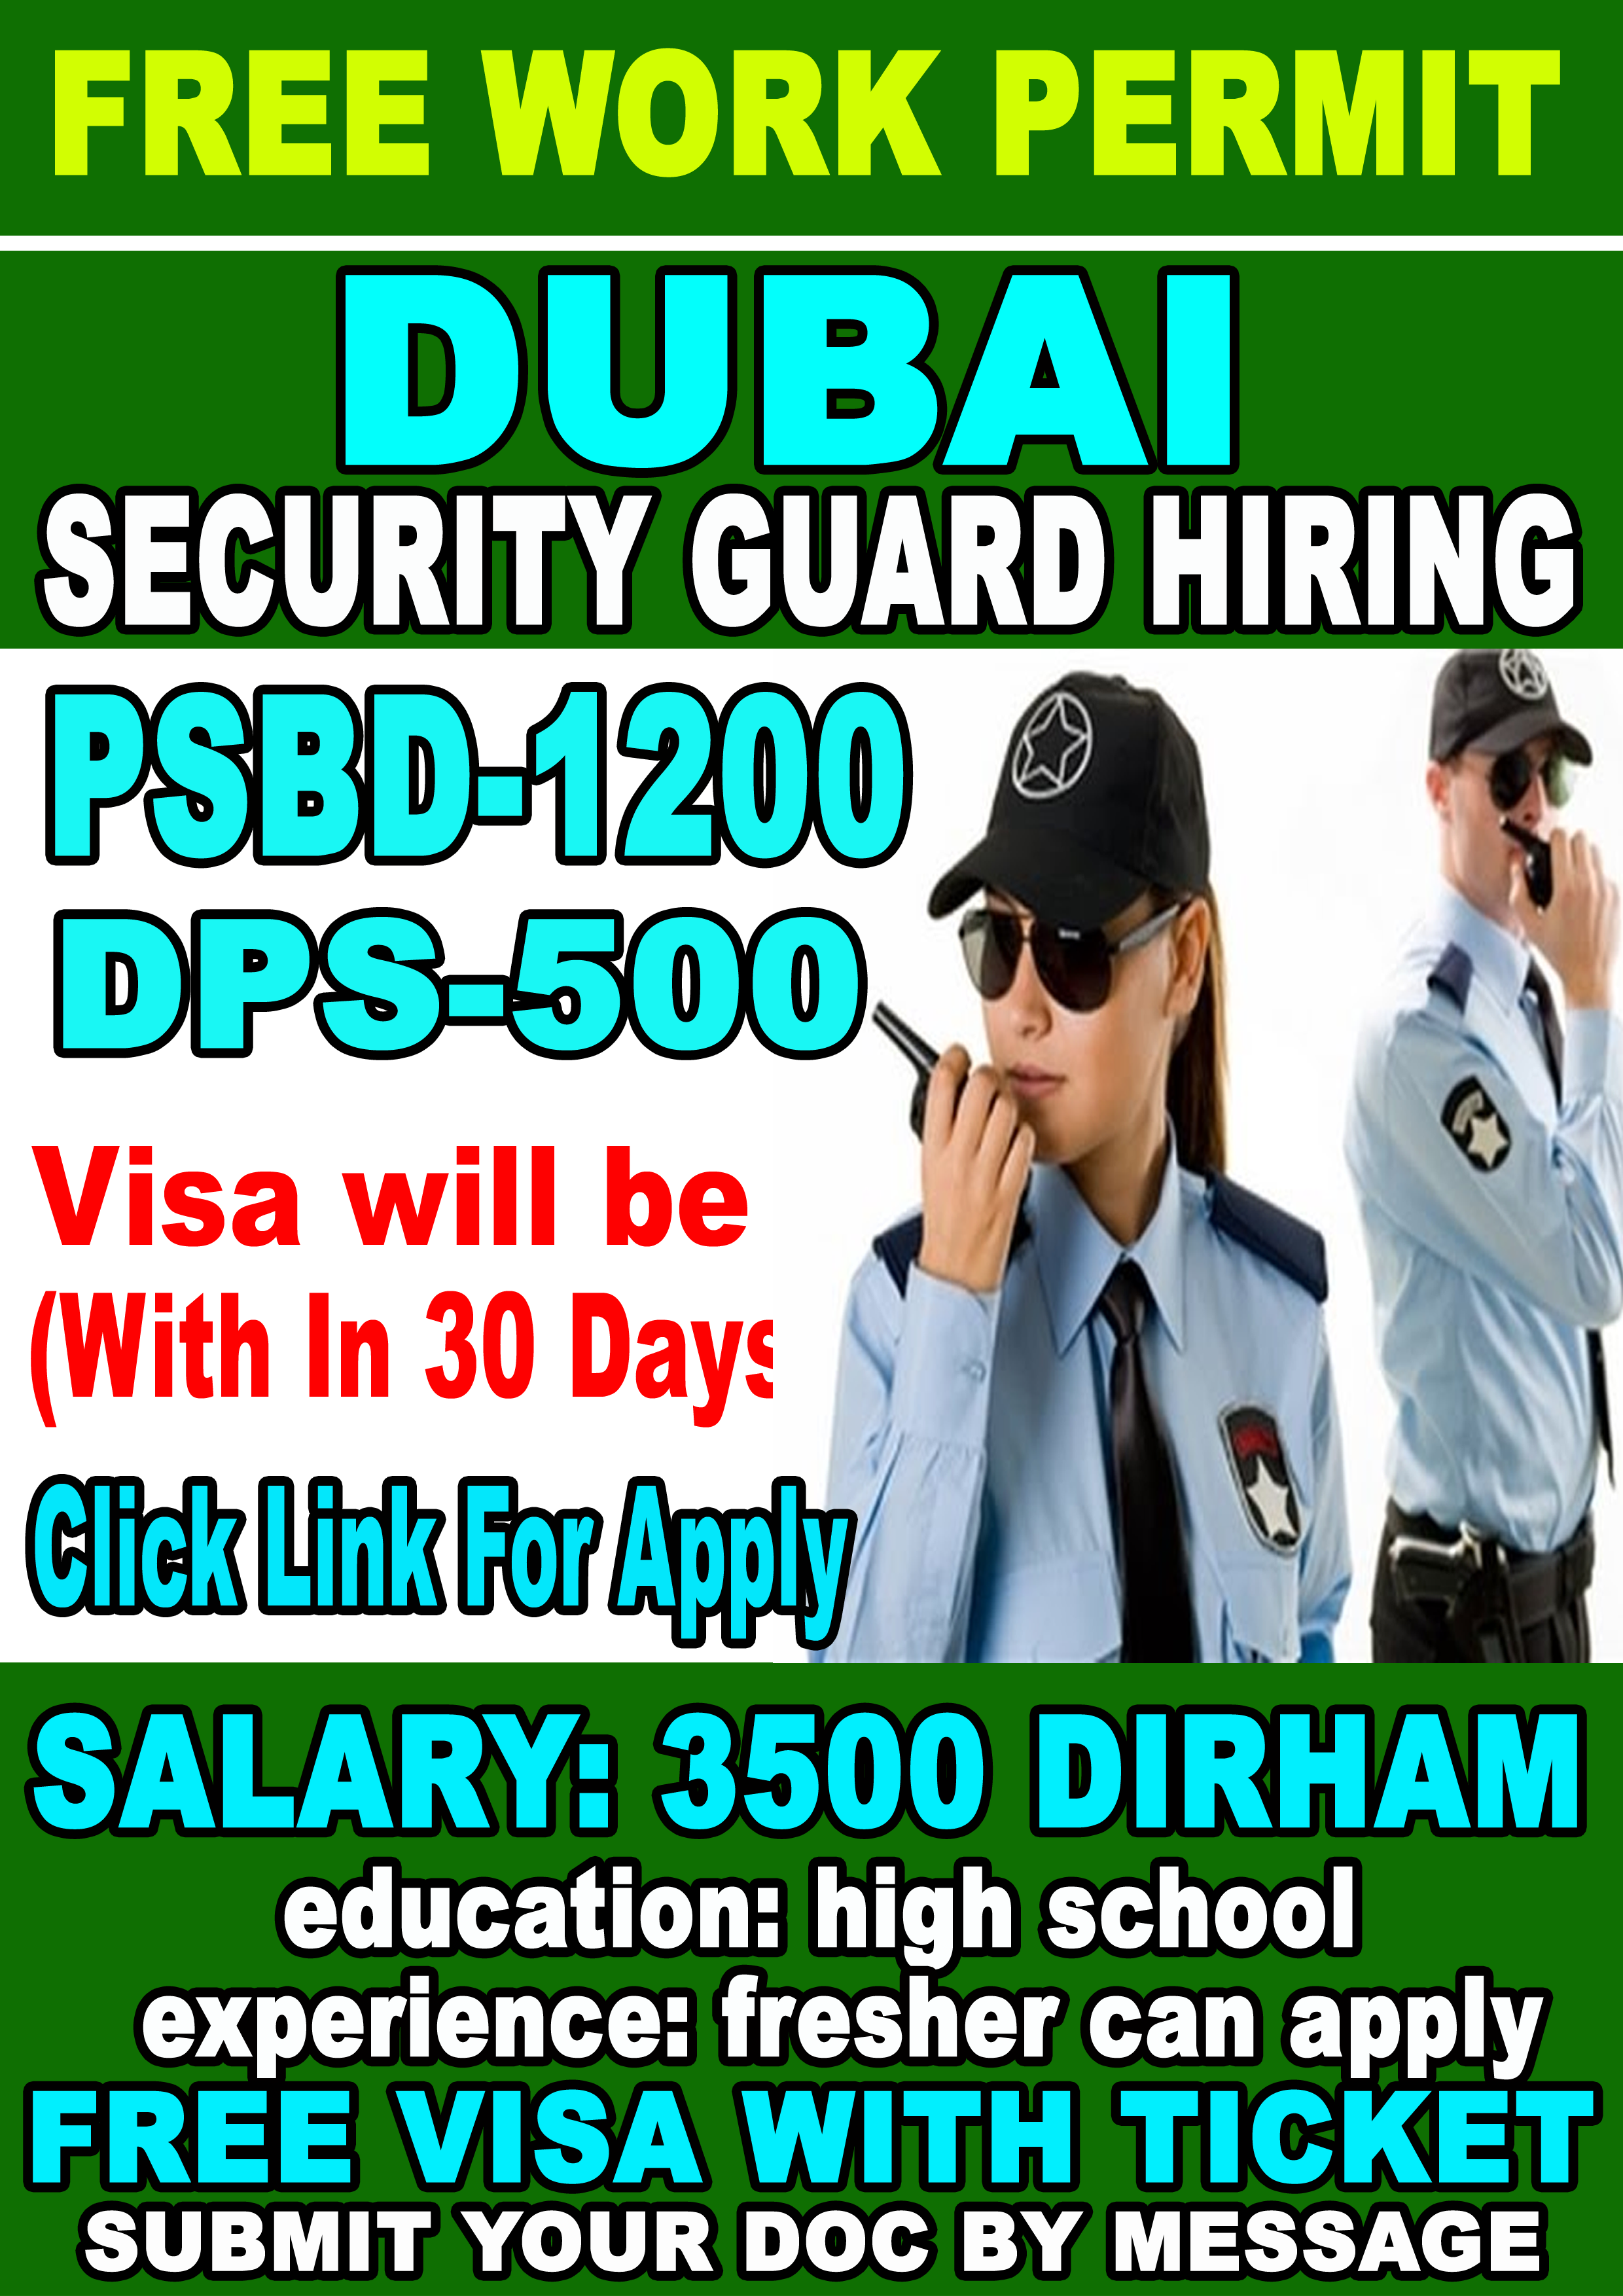 Head of security jobs in dubai